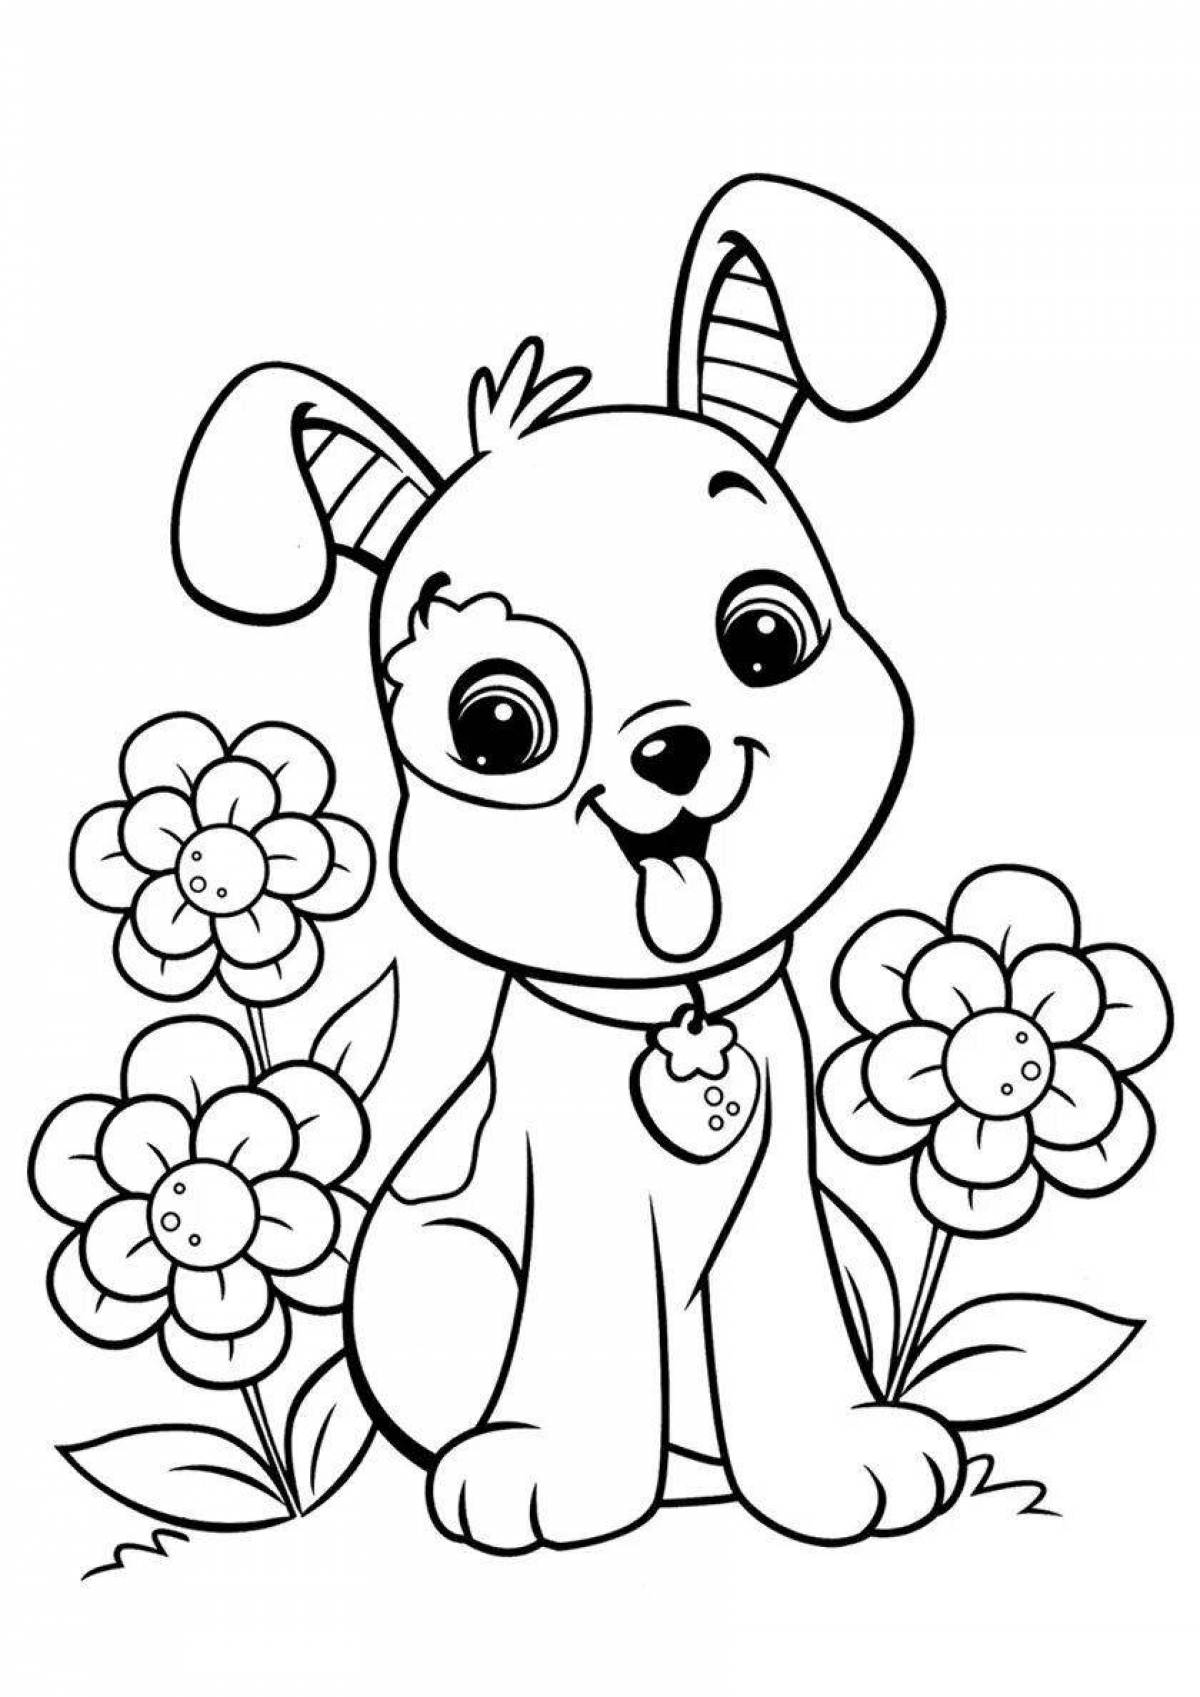 Joyful cute puppy coloring book